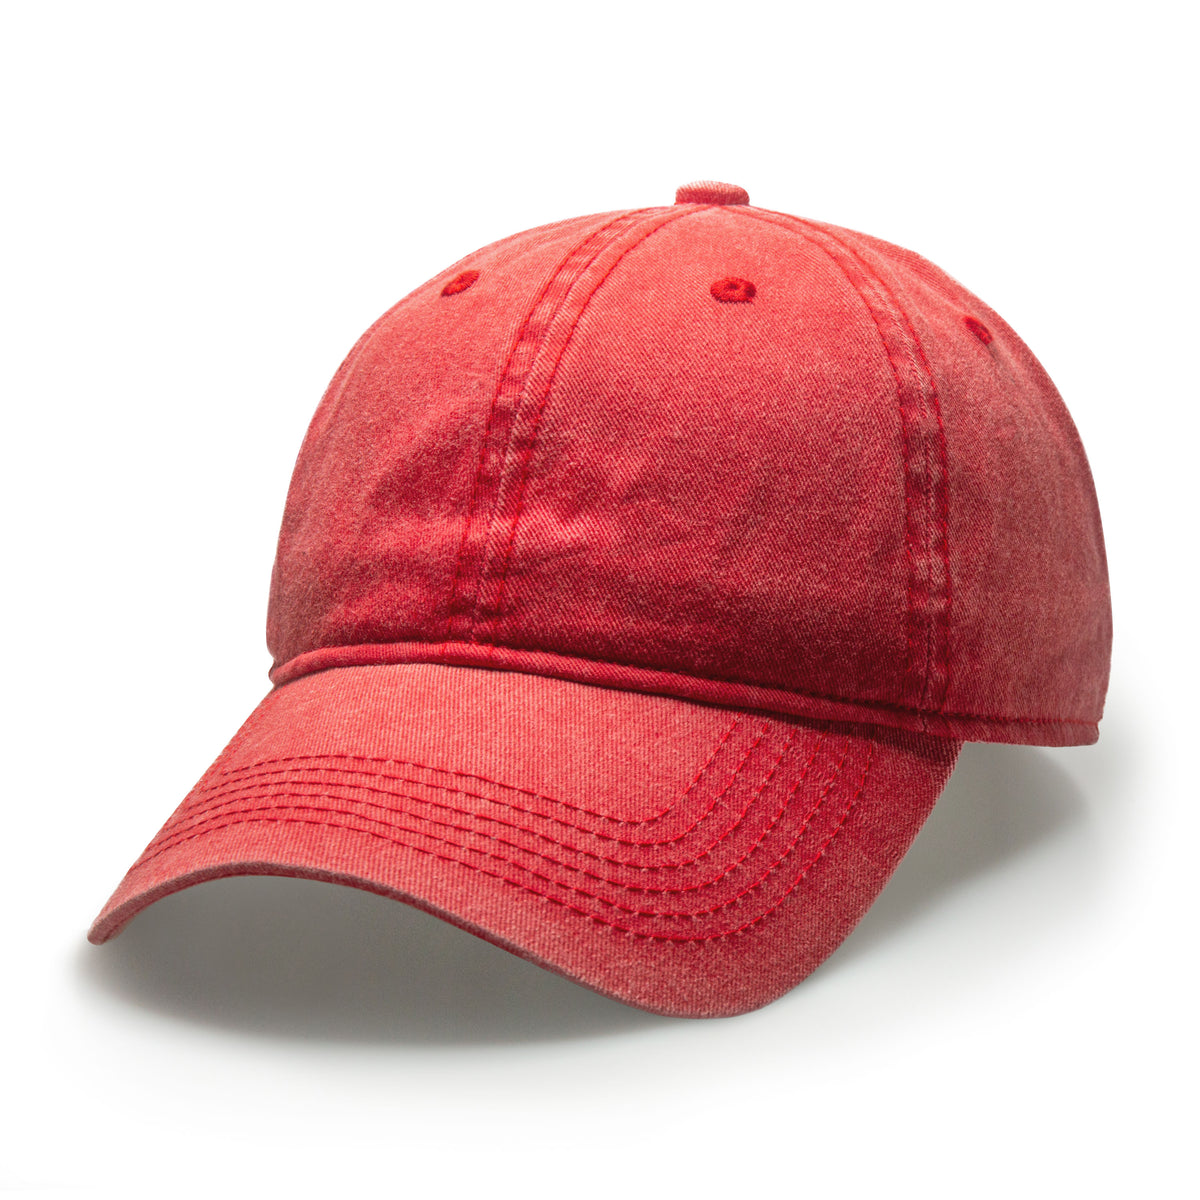 red vintage baseball cap